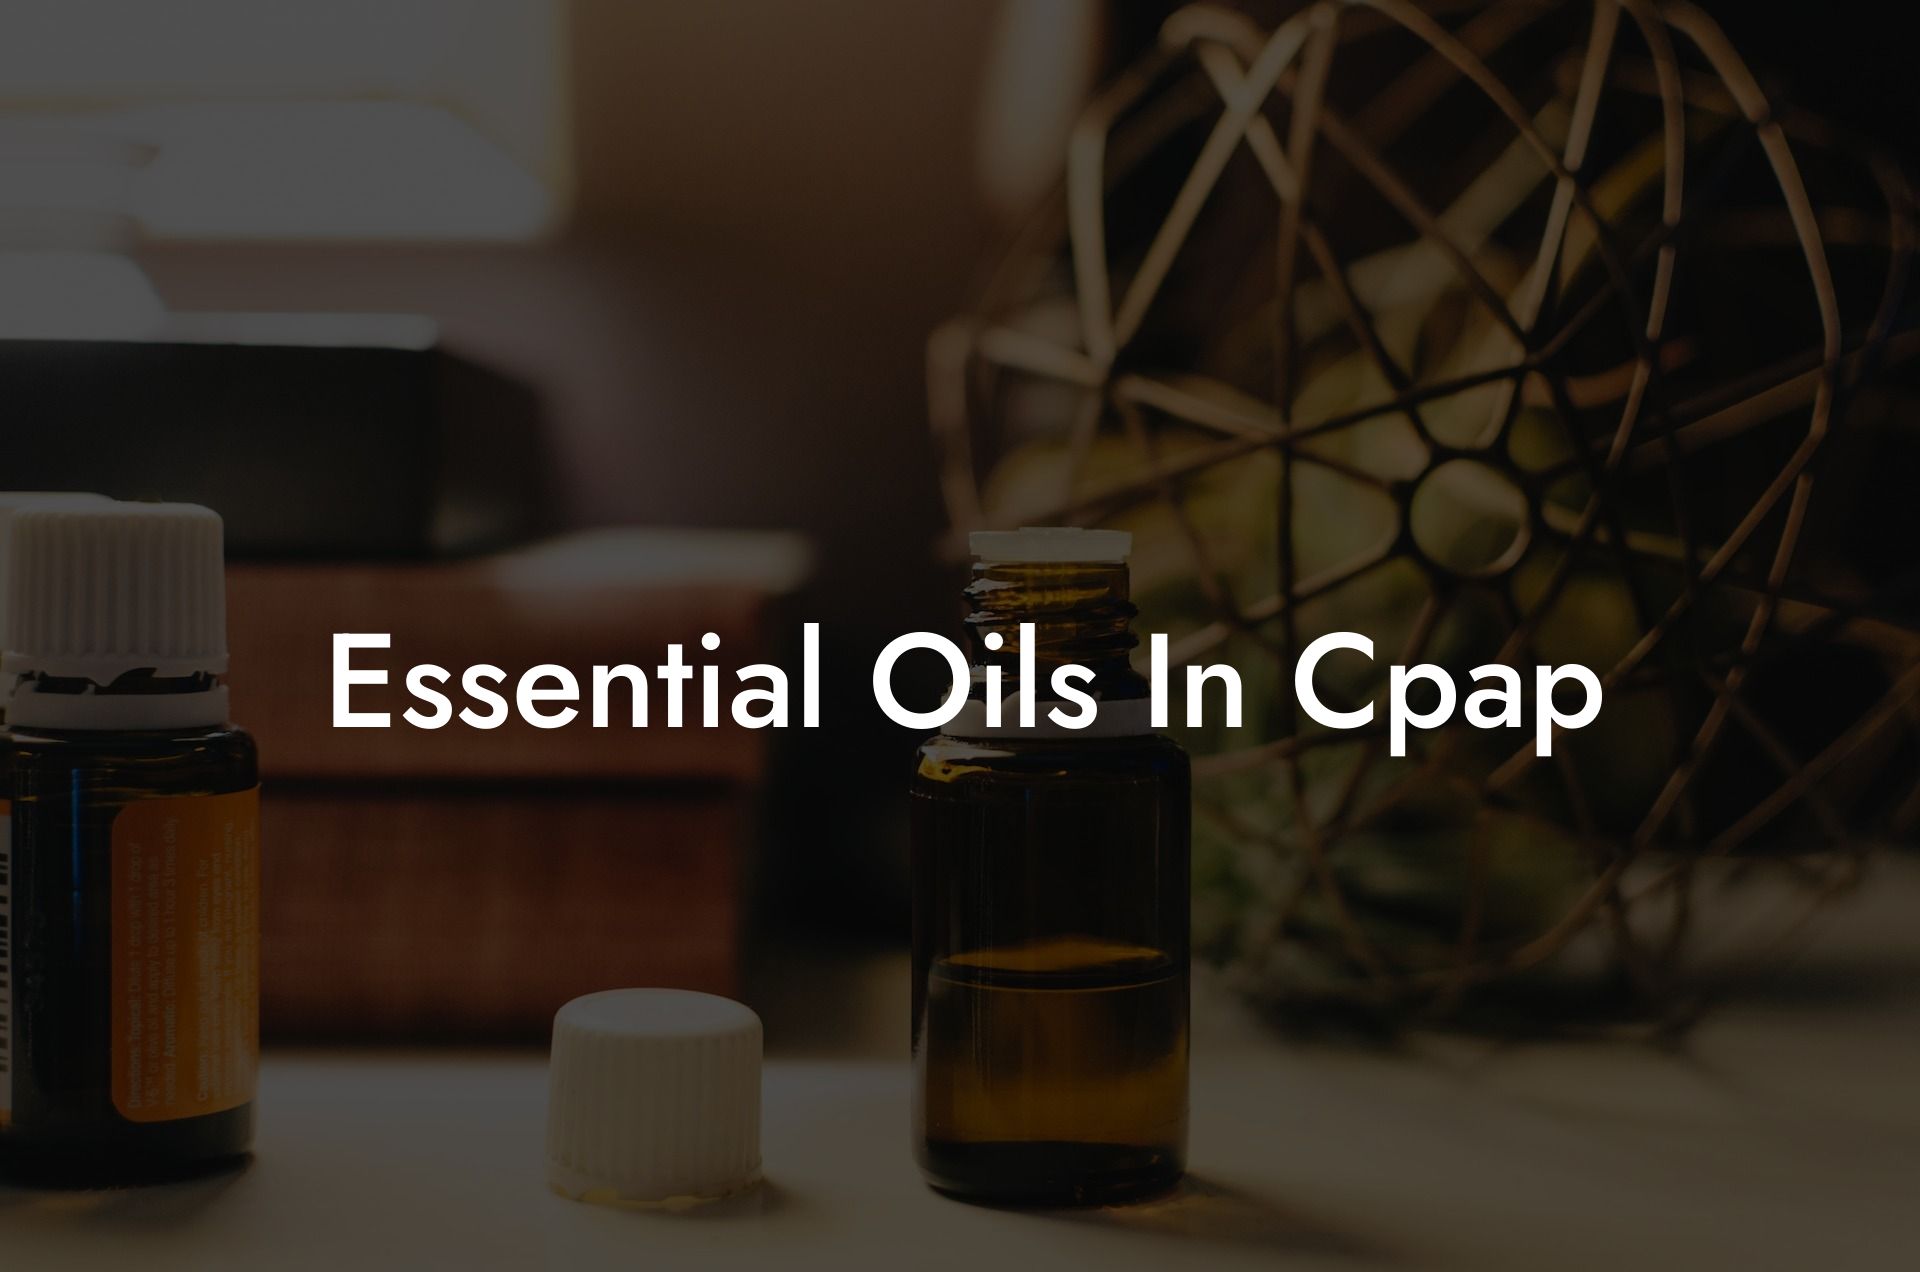 Essential Oils In Cpap